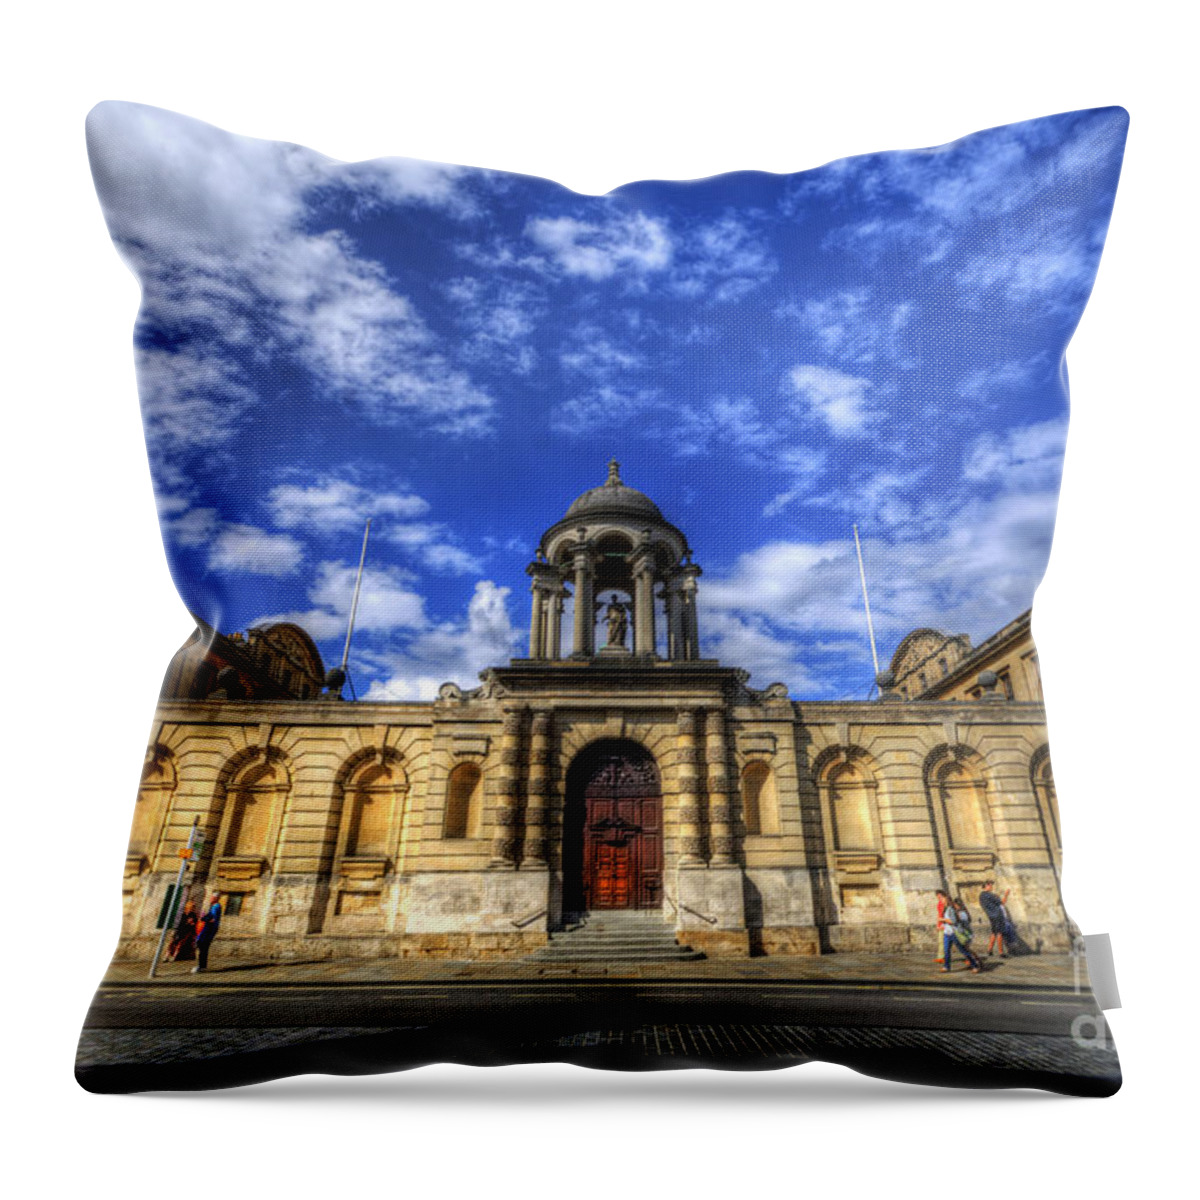 Yhun Suarez Throw Pillow featuring the photograph Queens College - Oxford by Yhun Suarez